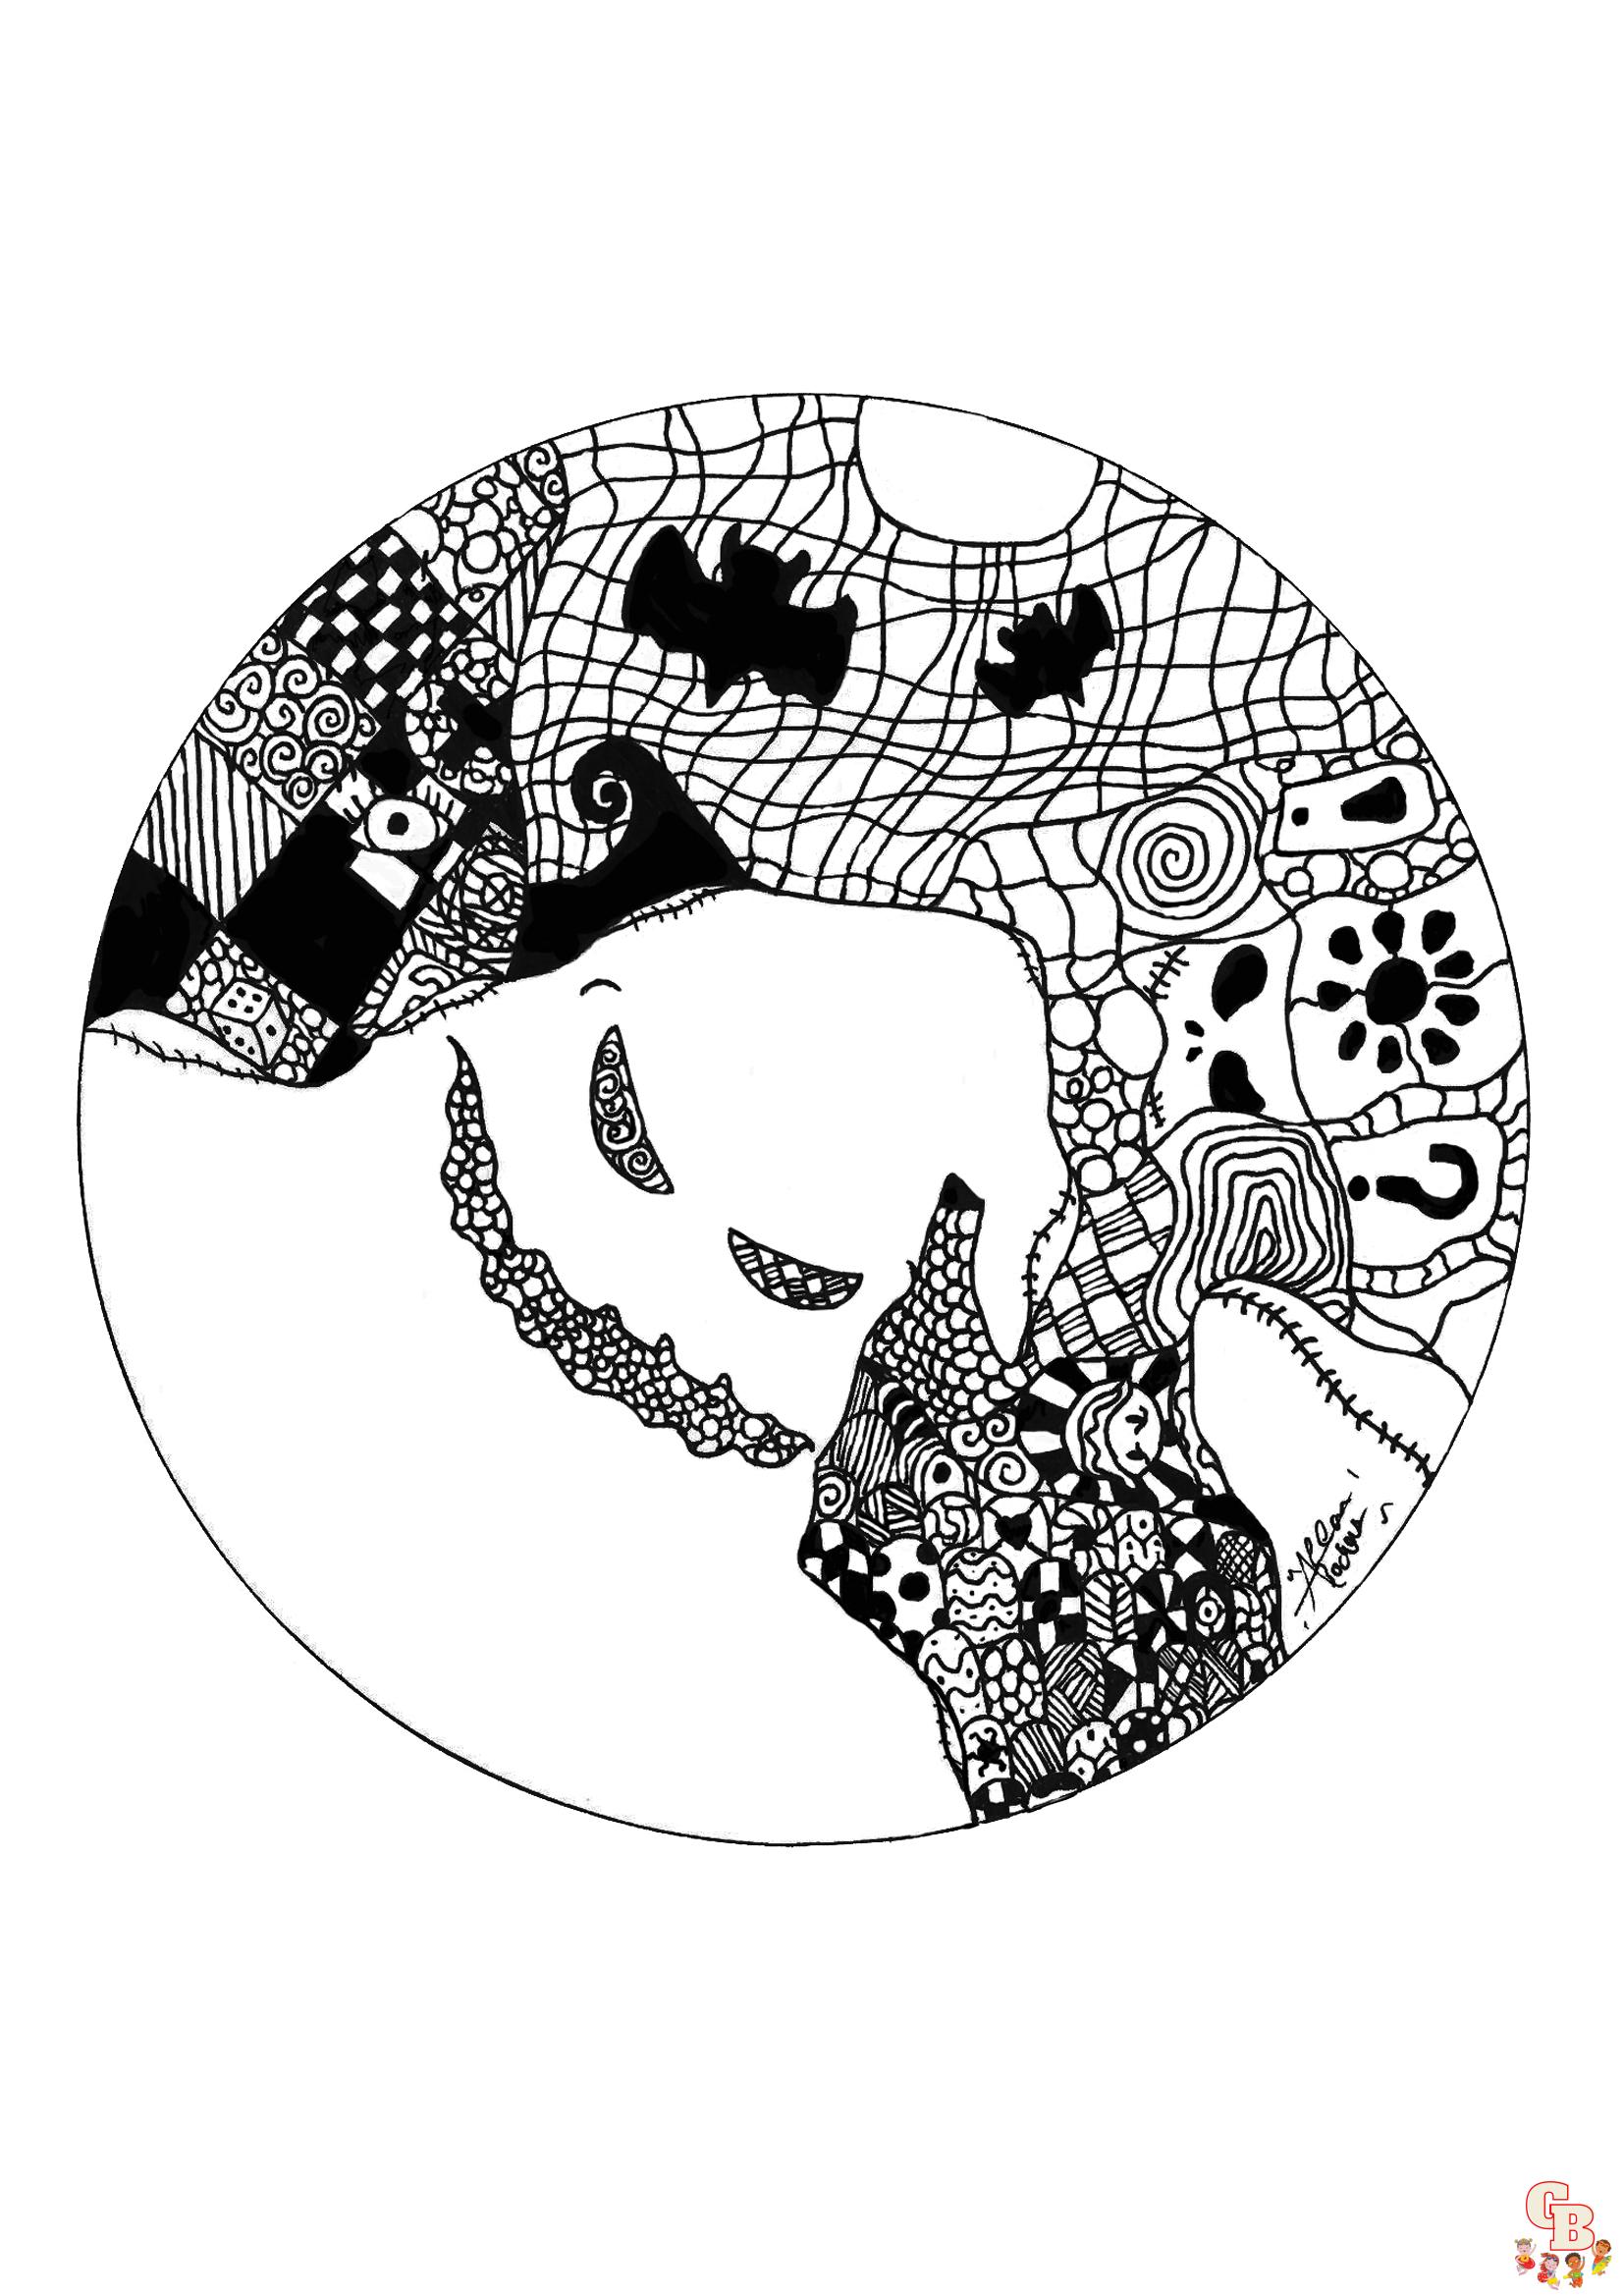 Coloriage Mandala dHalloween avec des fantomes